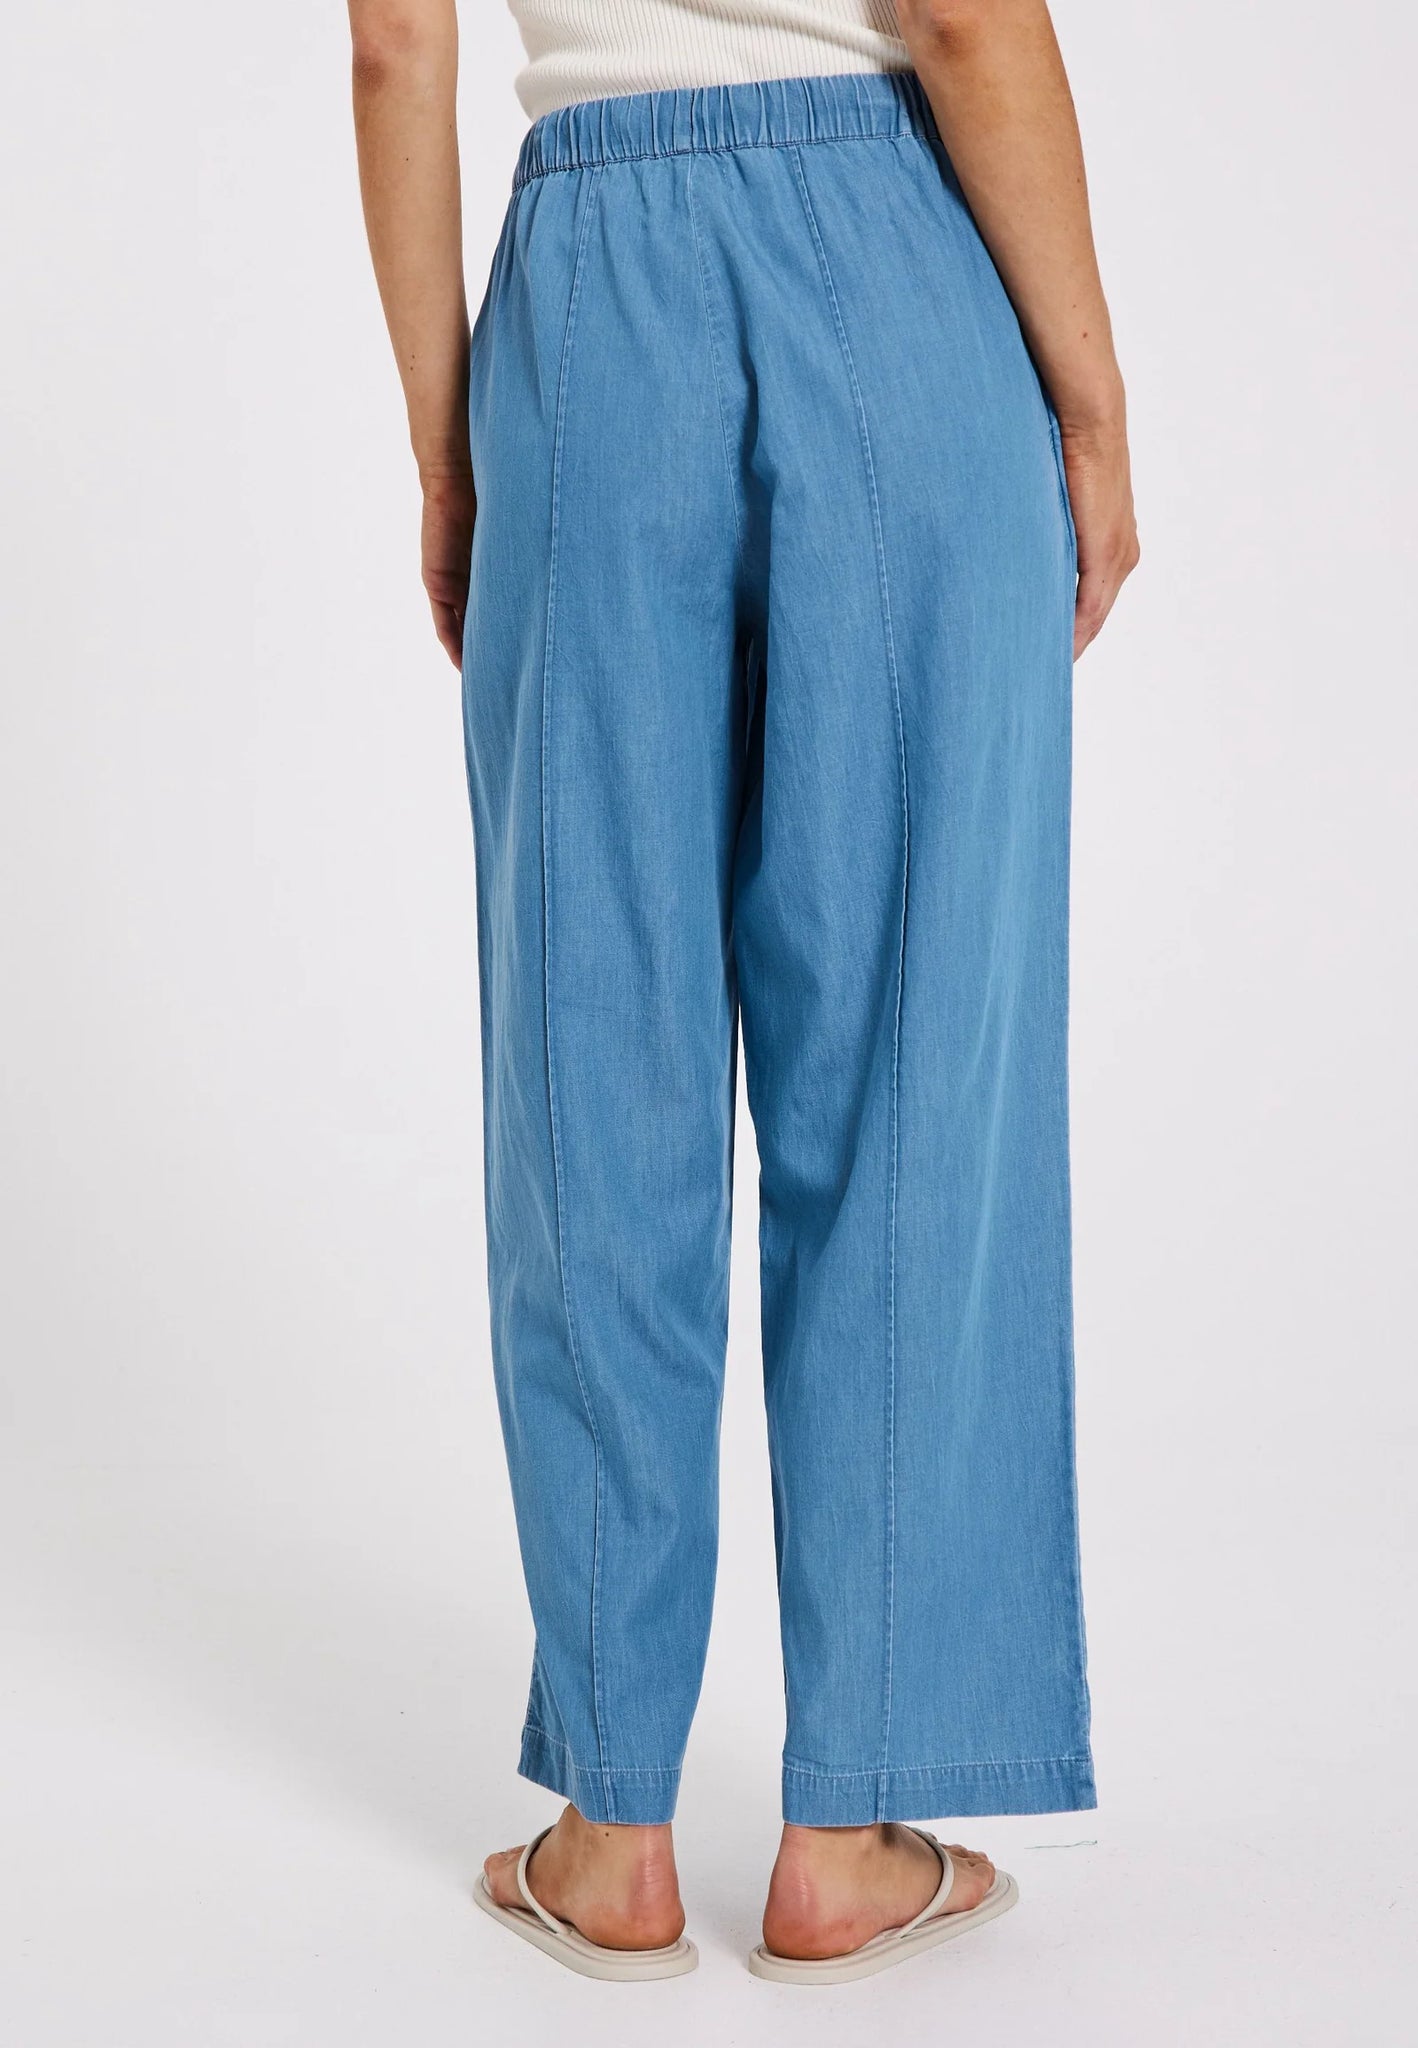 Rosa pants in medium blue